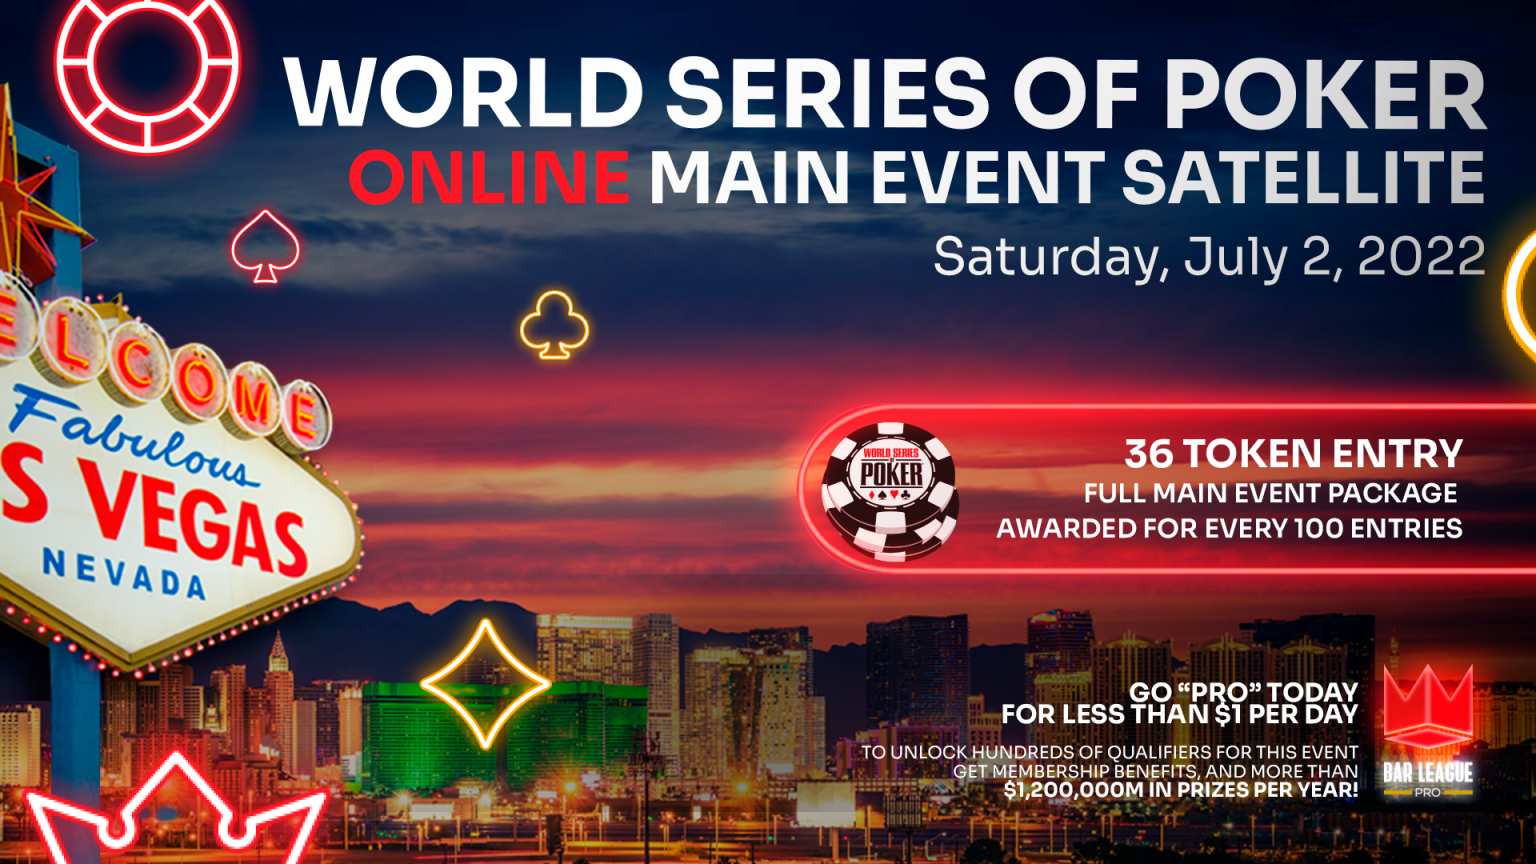 Bar Poker Open » WSOP Main Event Satellite on July 2, 2022 3 Steps to